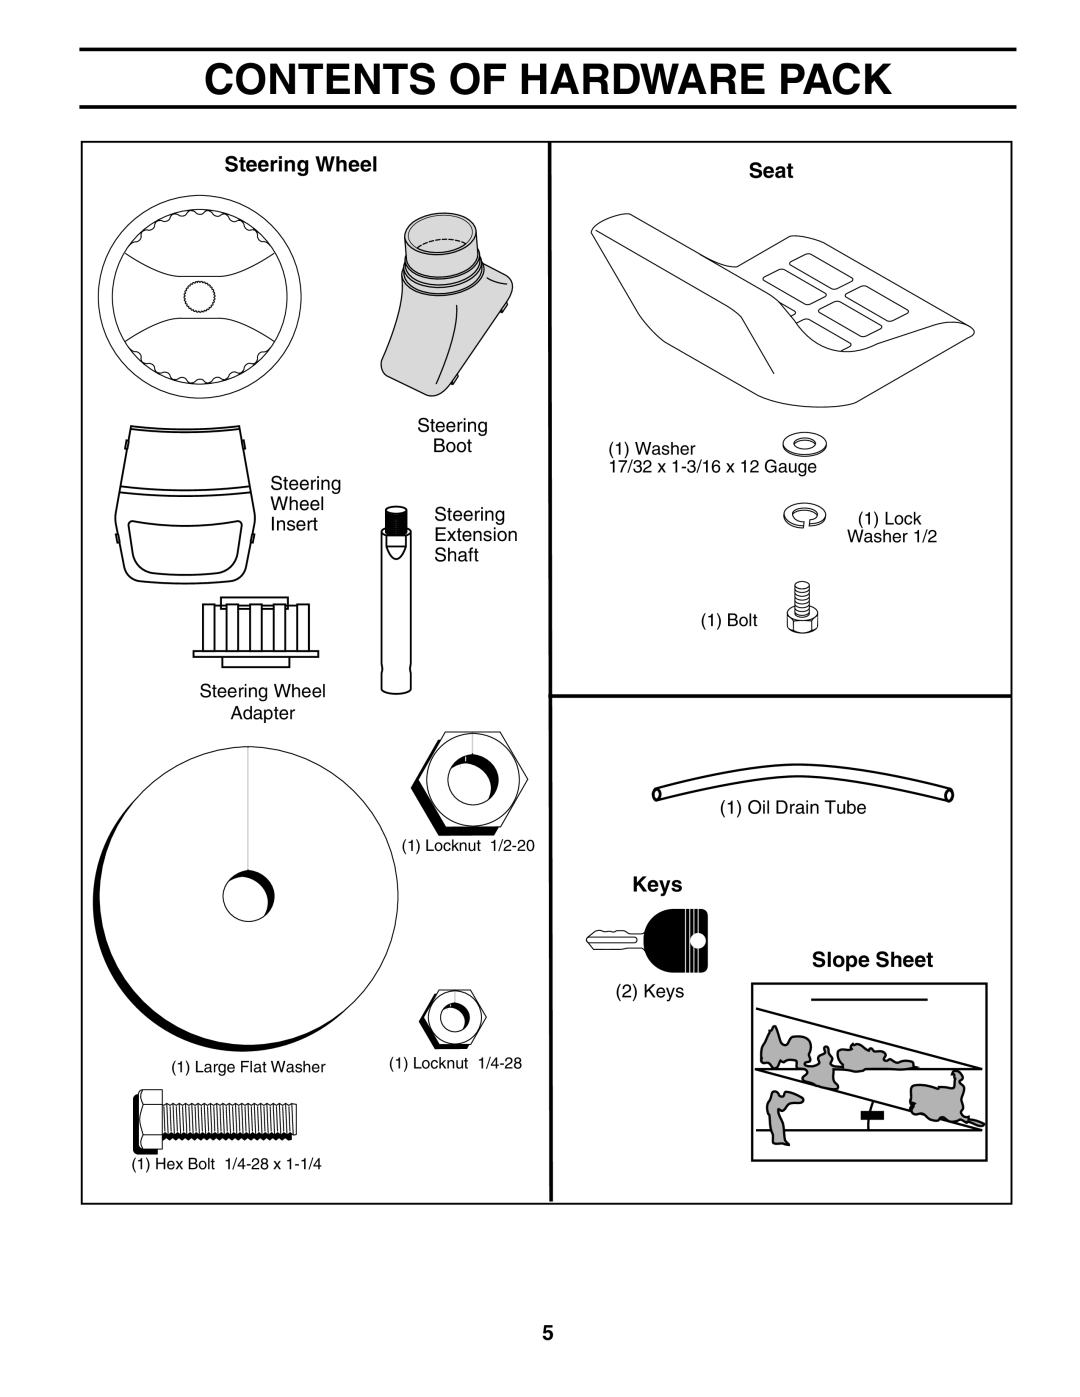 Weed Eater 191064 manual Contents Of Hardware Pack, Steering Wheel, Seat, Keys, Slope Sheet 